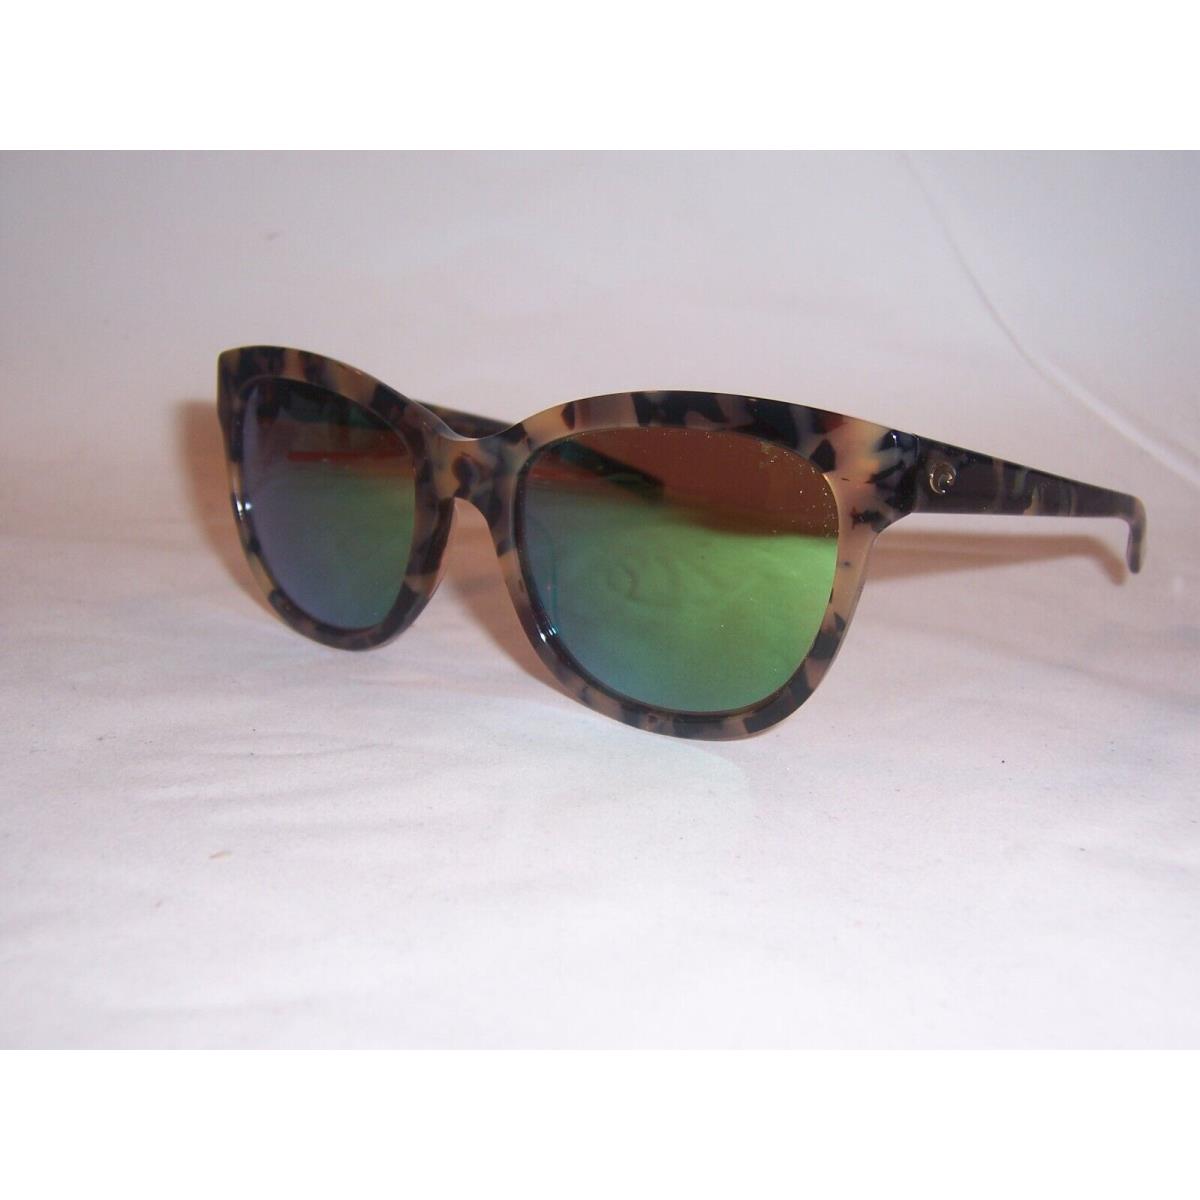 Costa Del Mar sunglasses Bimini - Tortoise Frame, Green Lens